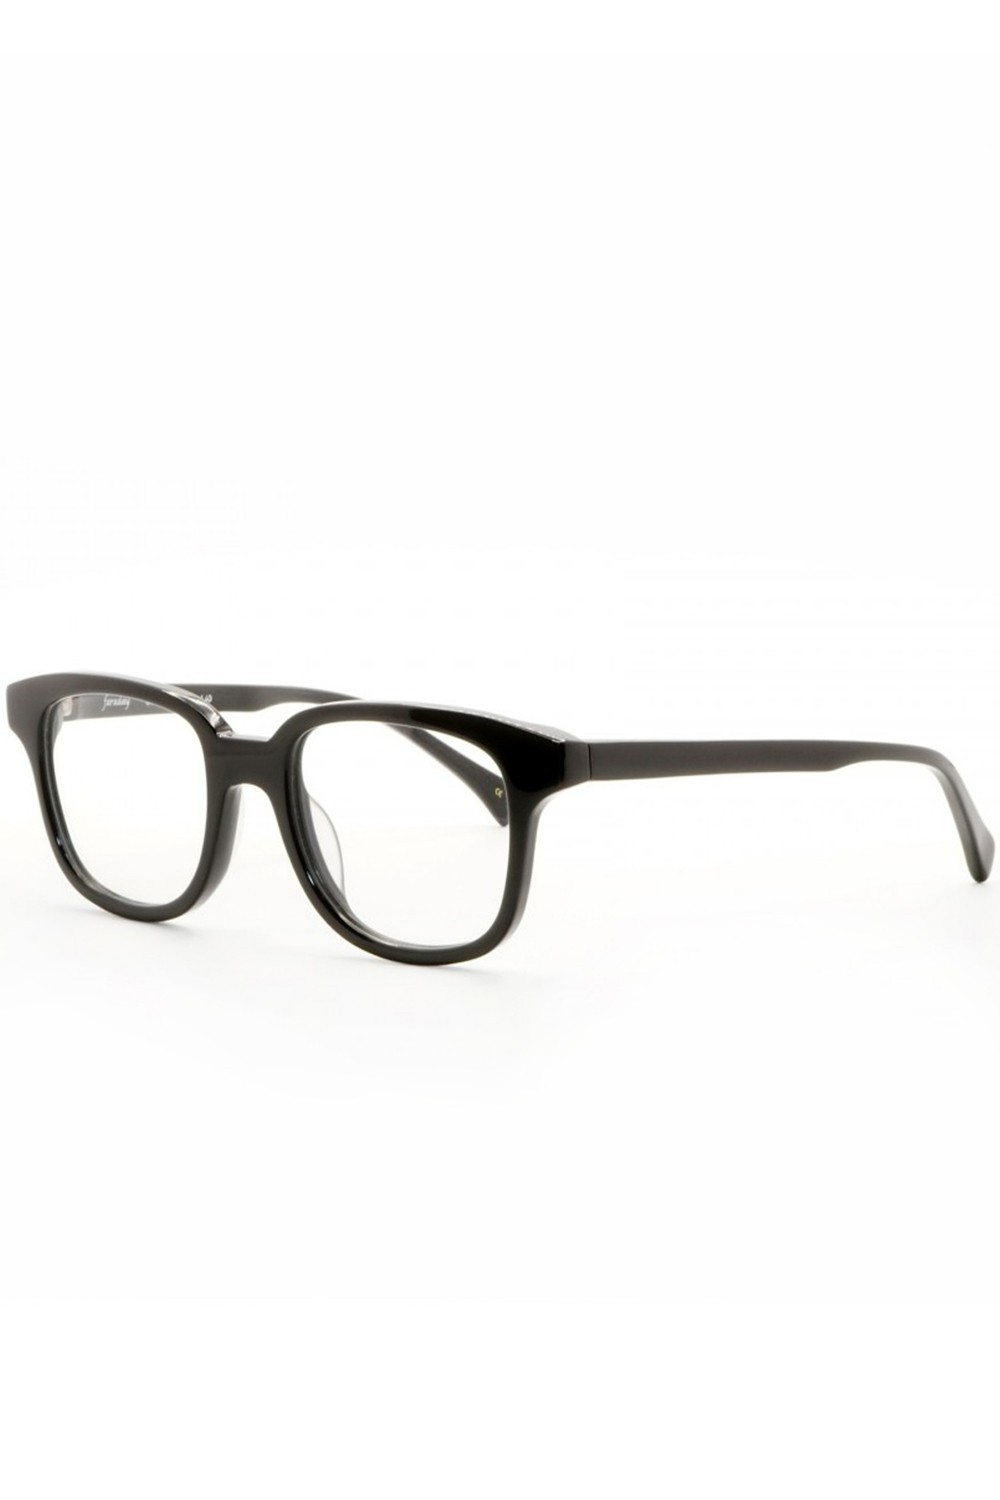 AM Eyewear - Occhiali da vista in celluloide squadrati unisex nero, marrone -